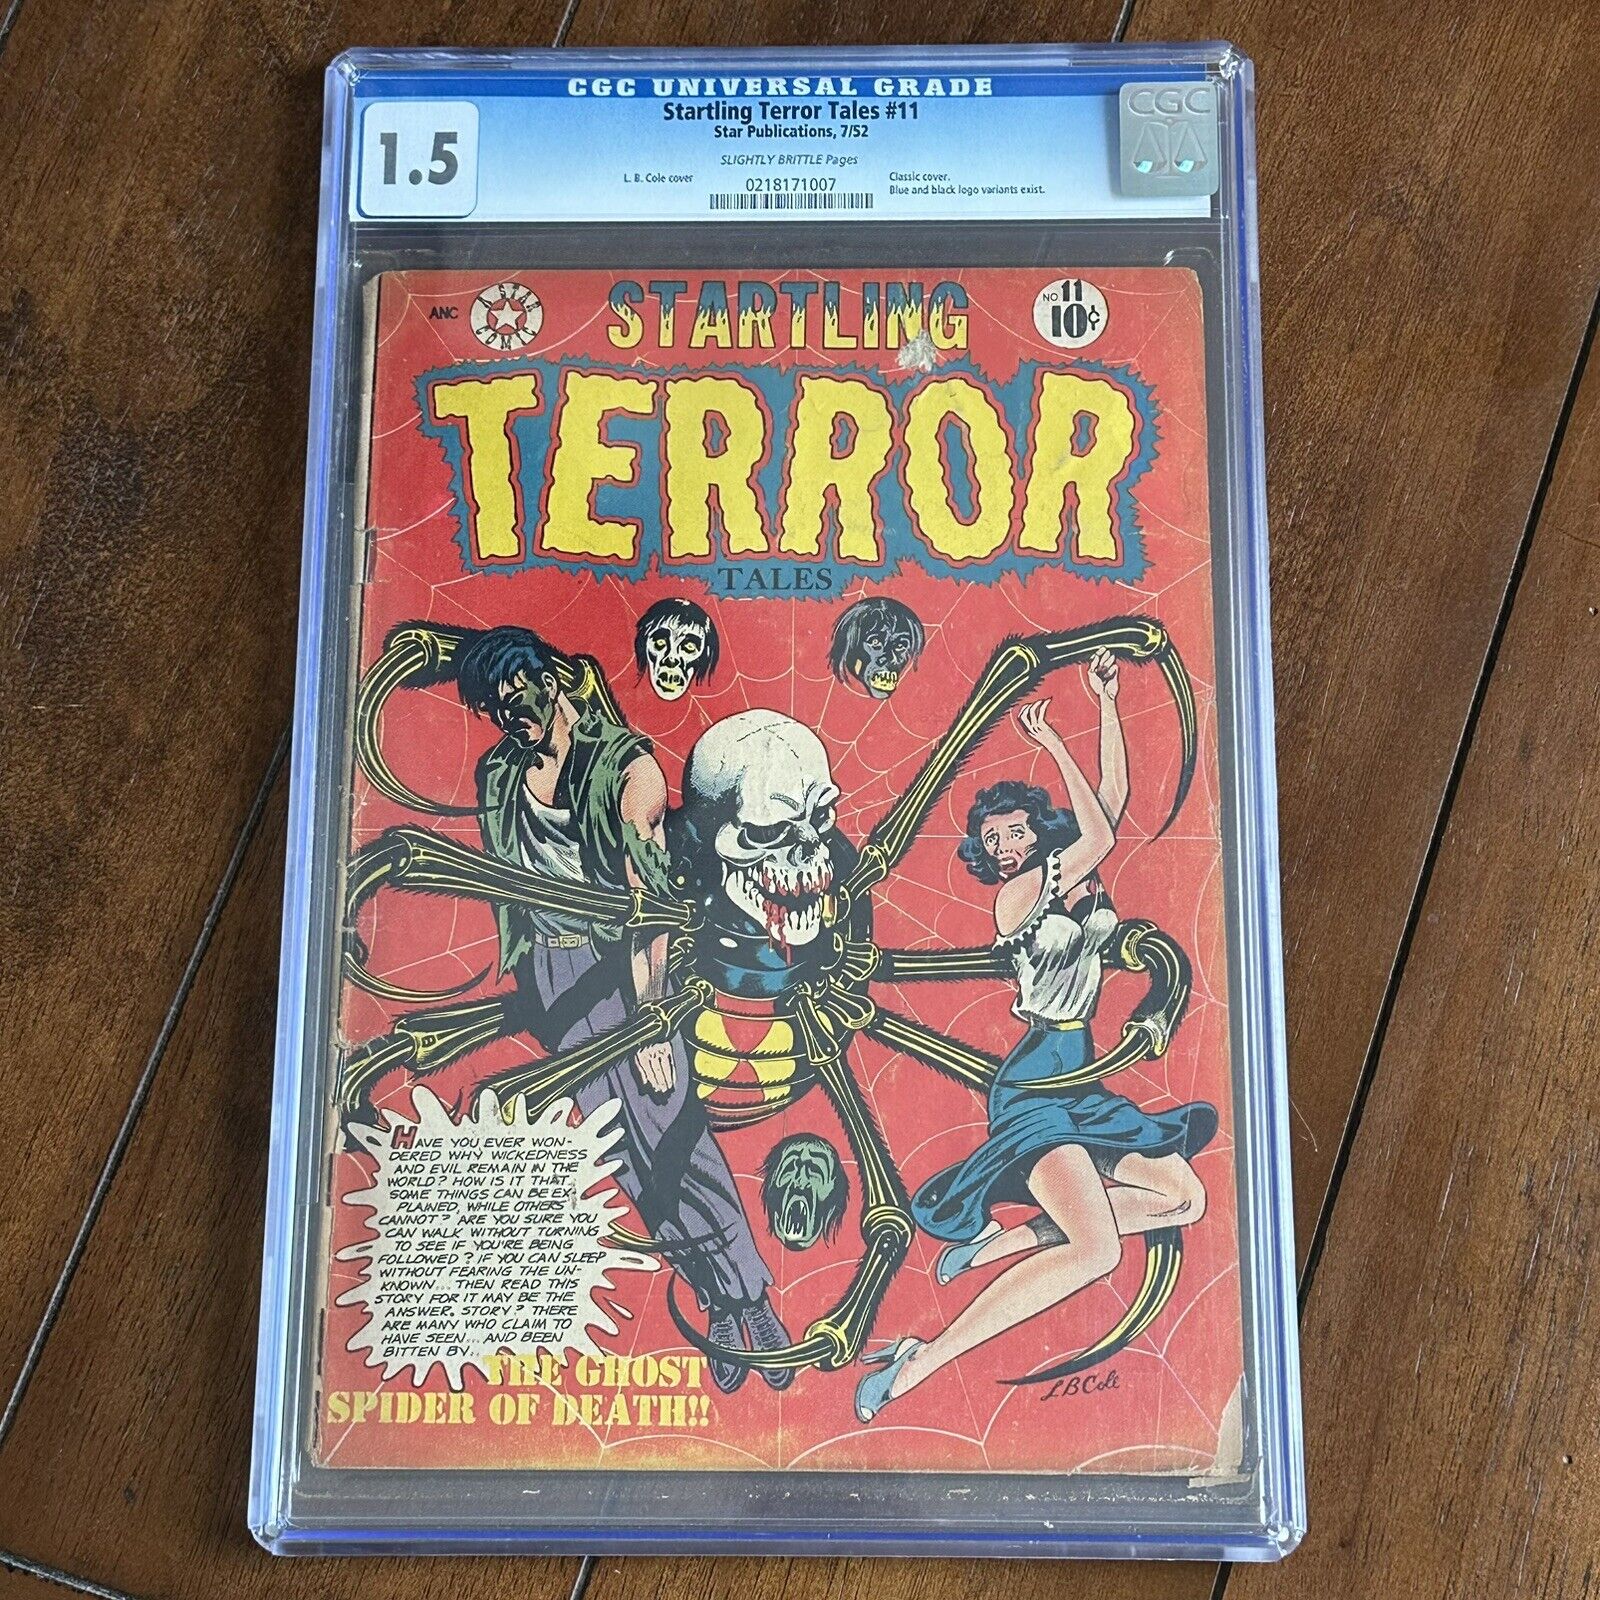 Startling Terror Tales #11 (1952) - L.B. Cole Pre-Code Horror PCH - CGC 1.5